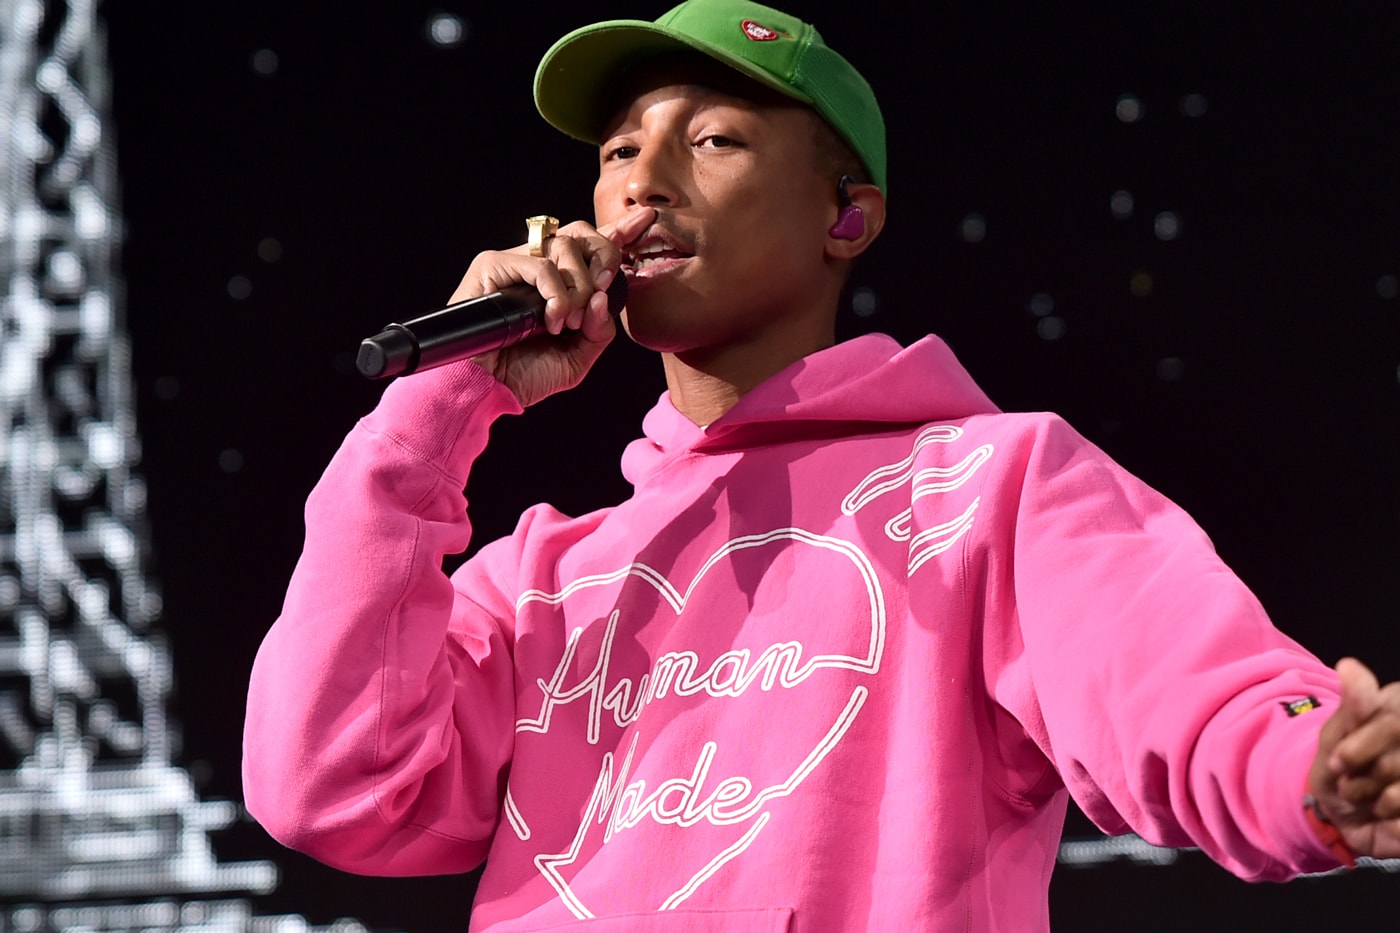 Pharrell Williams Single "Yellow Light"